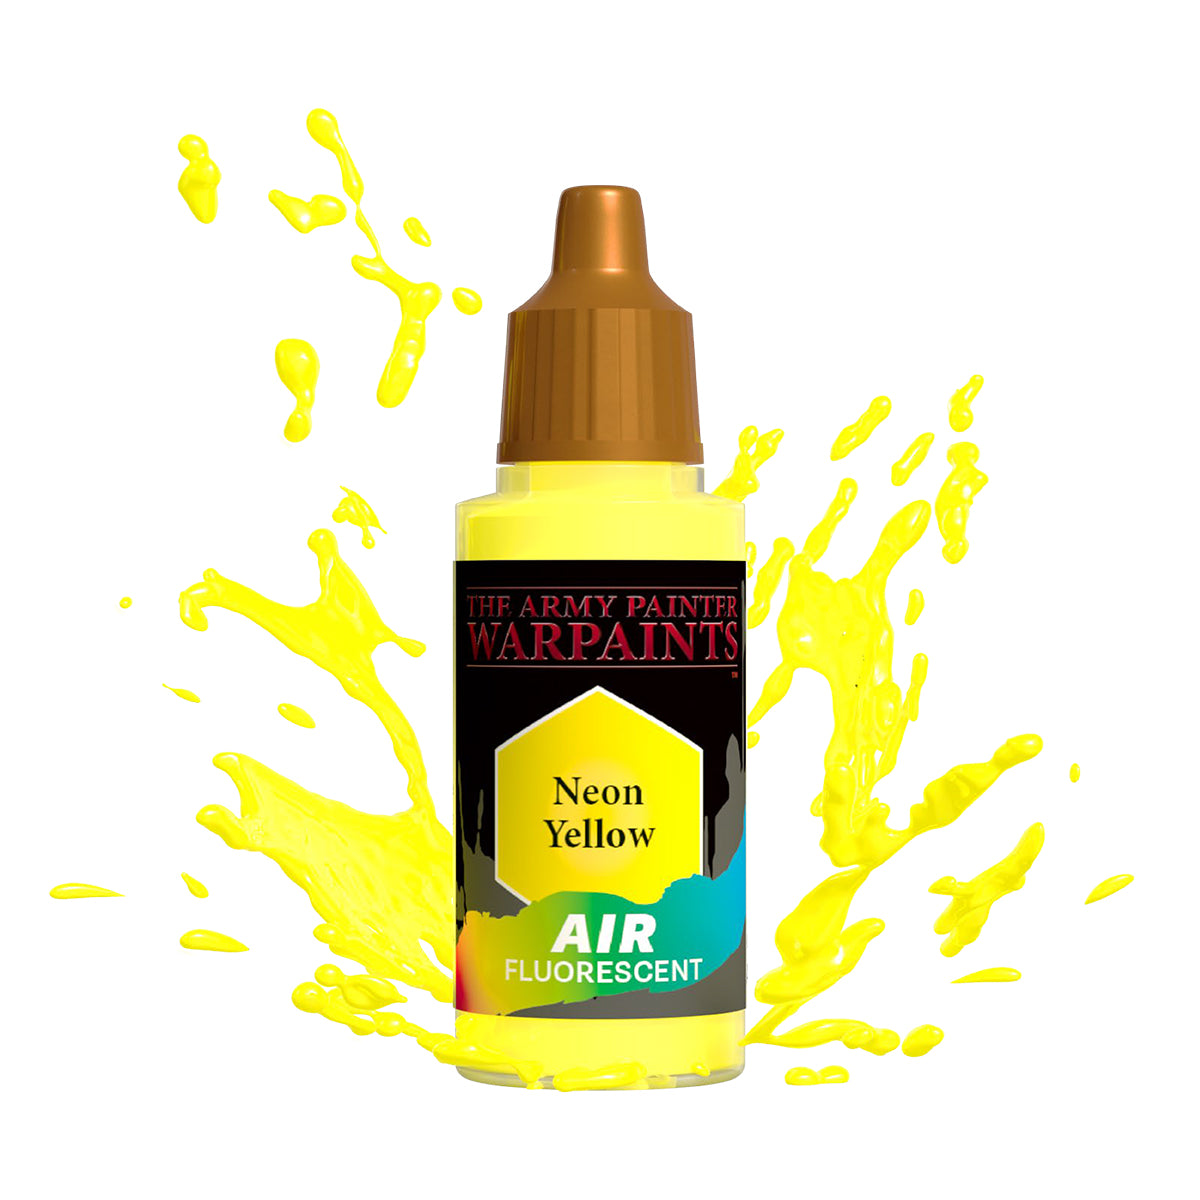 Warpaints Air Fluorescent: Neon Yellow